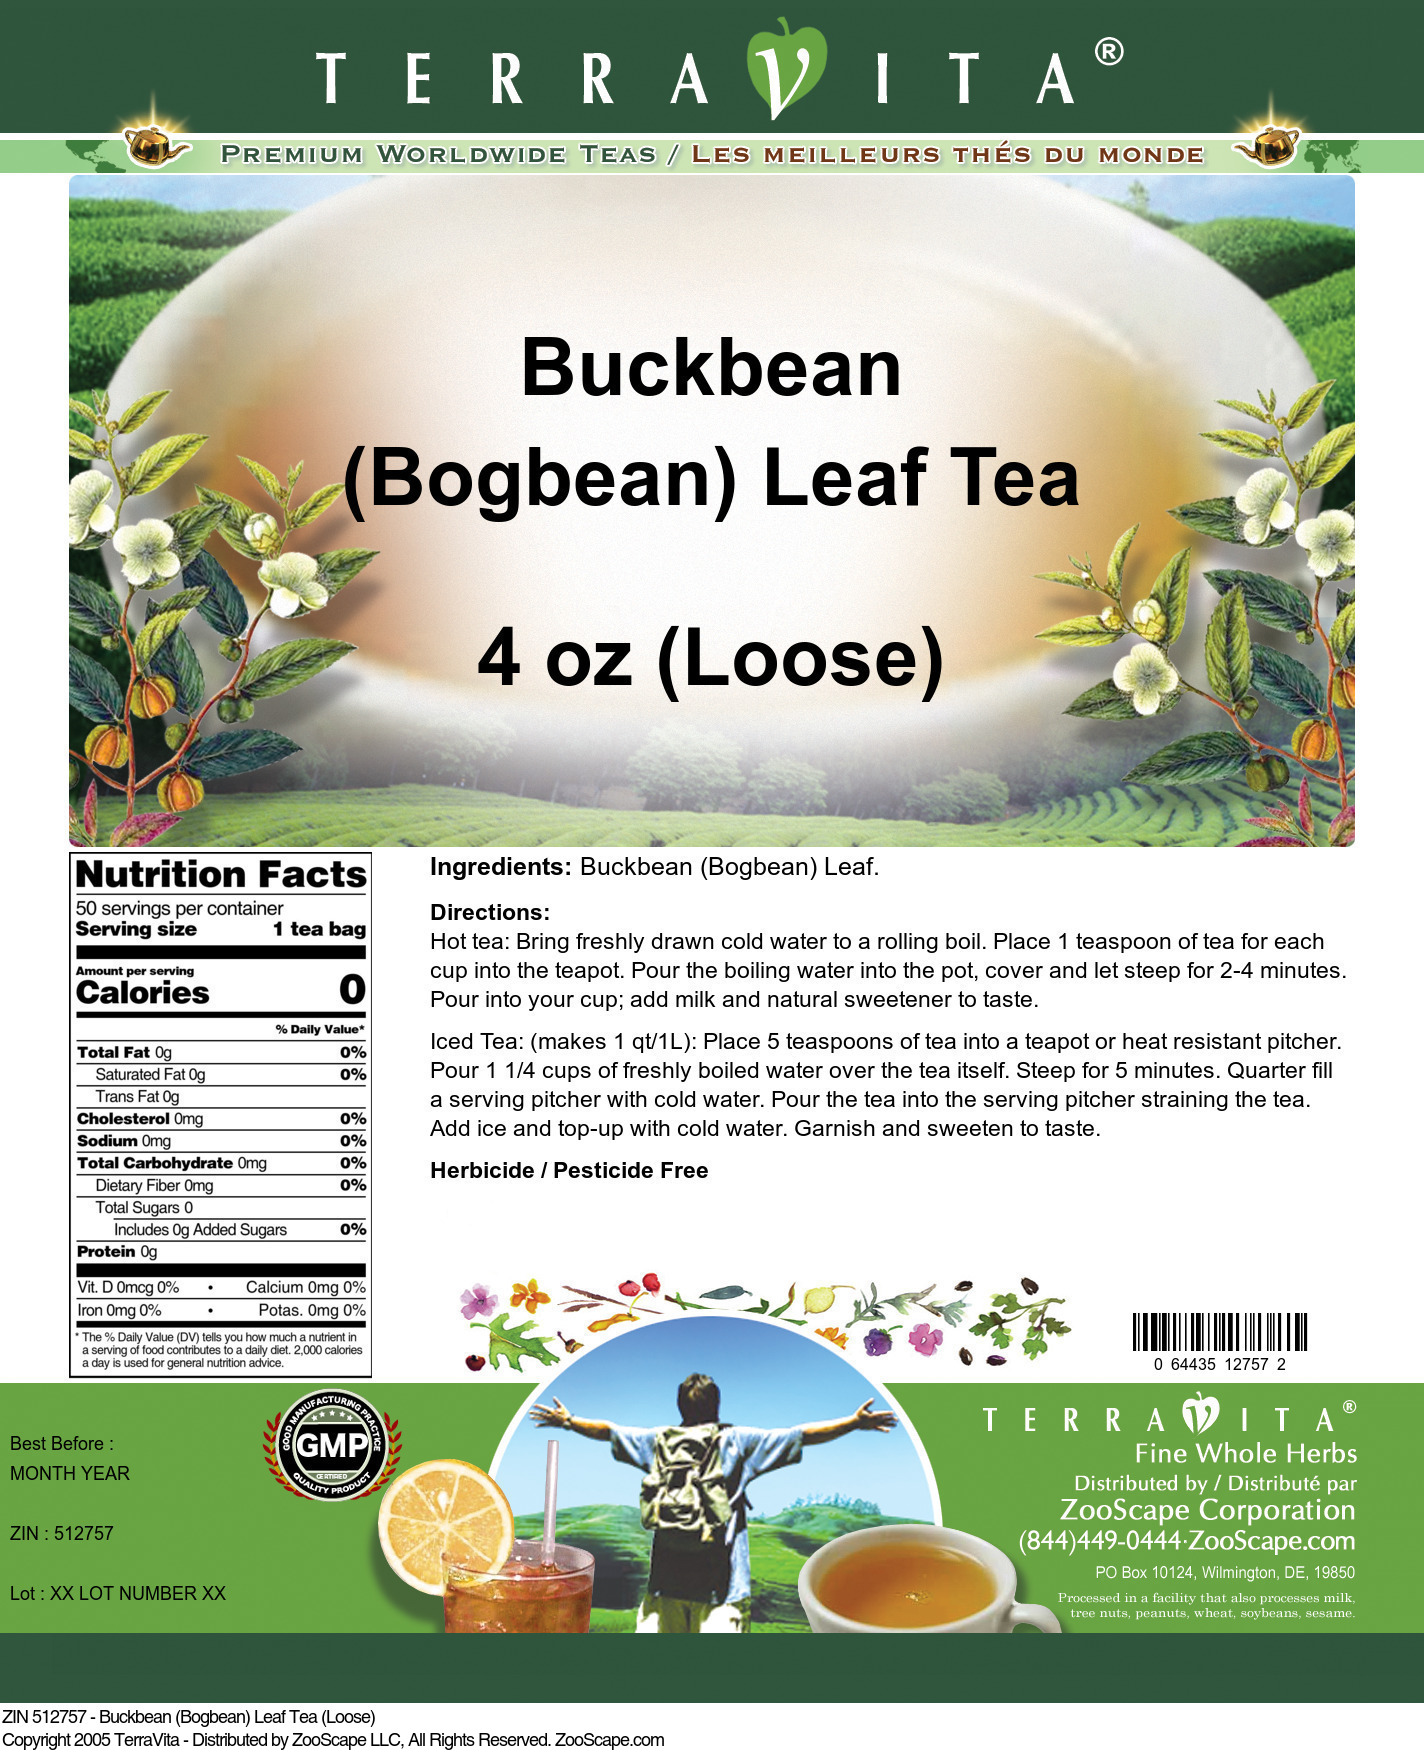 Buckbean (Bogbean) Leaf Tea (Loose) - Label